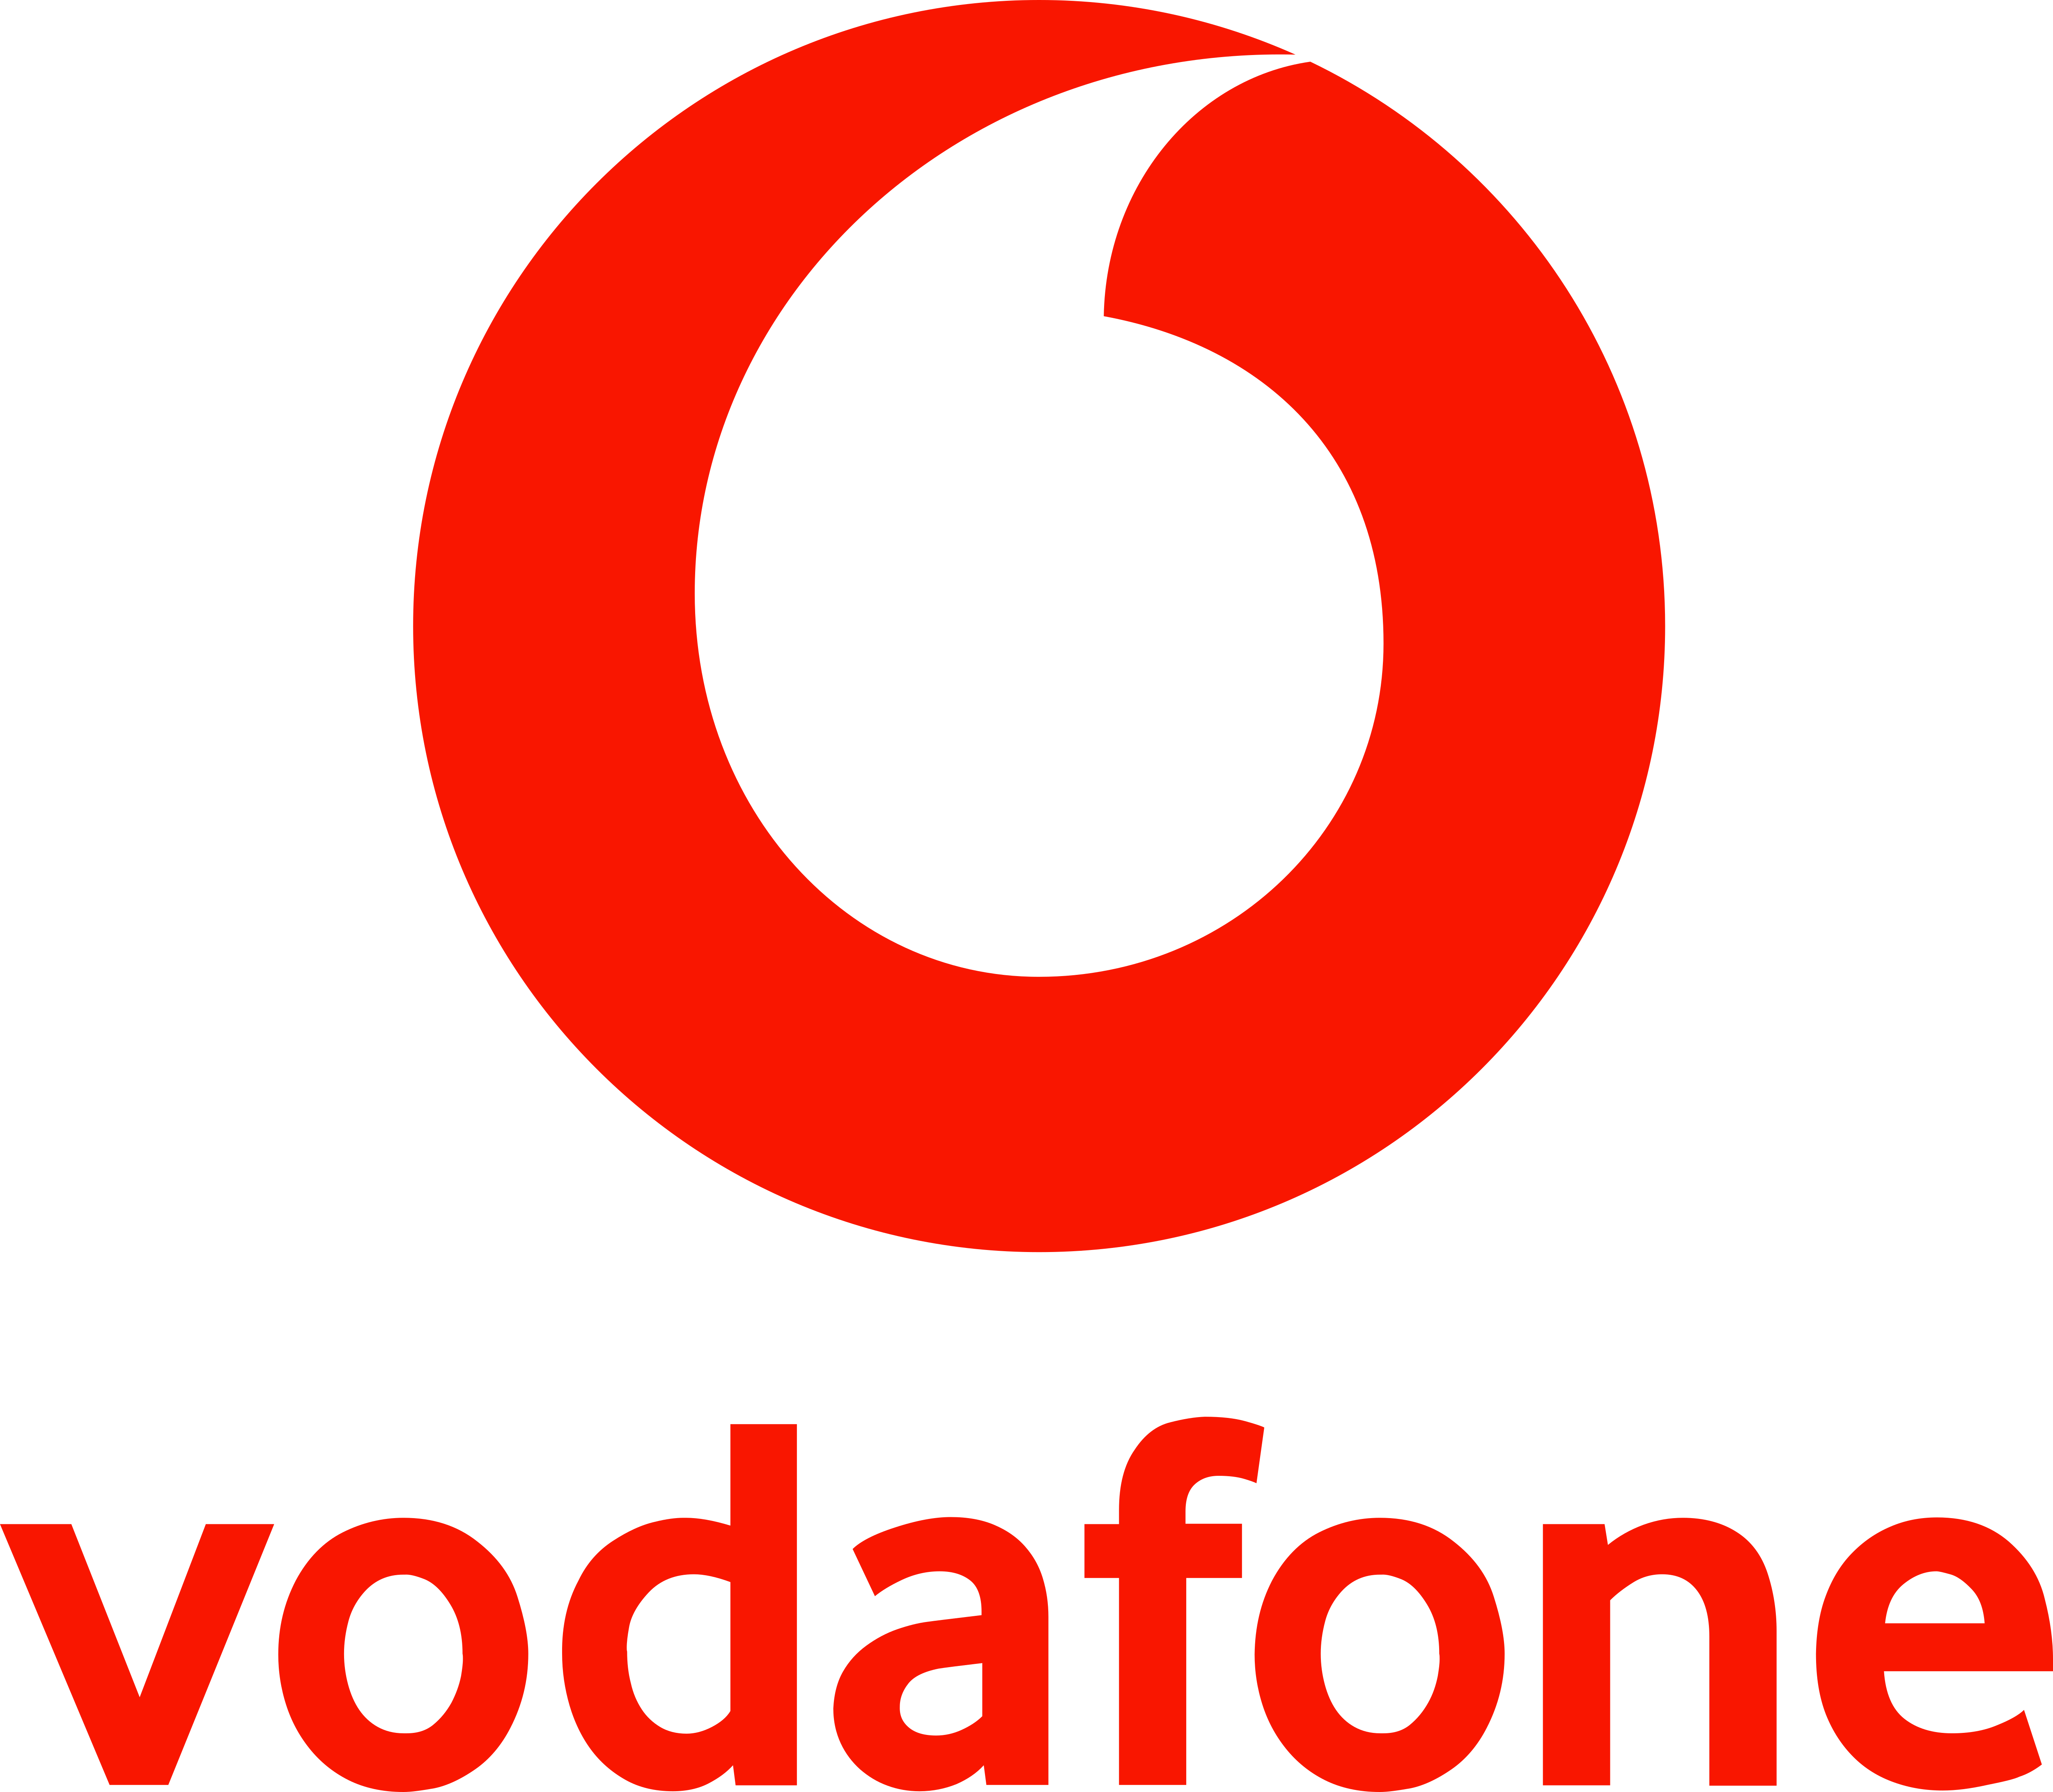 Vodafone Footer Logo